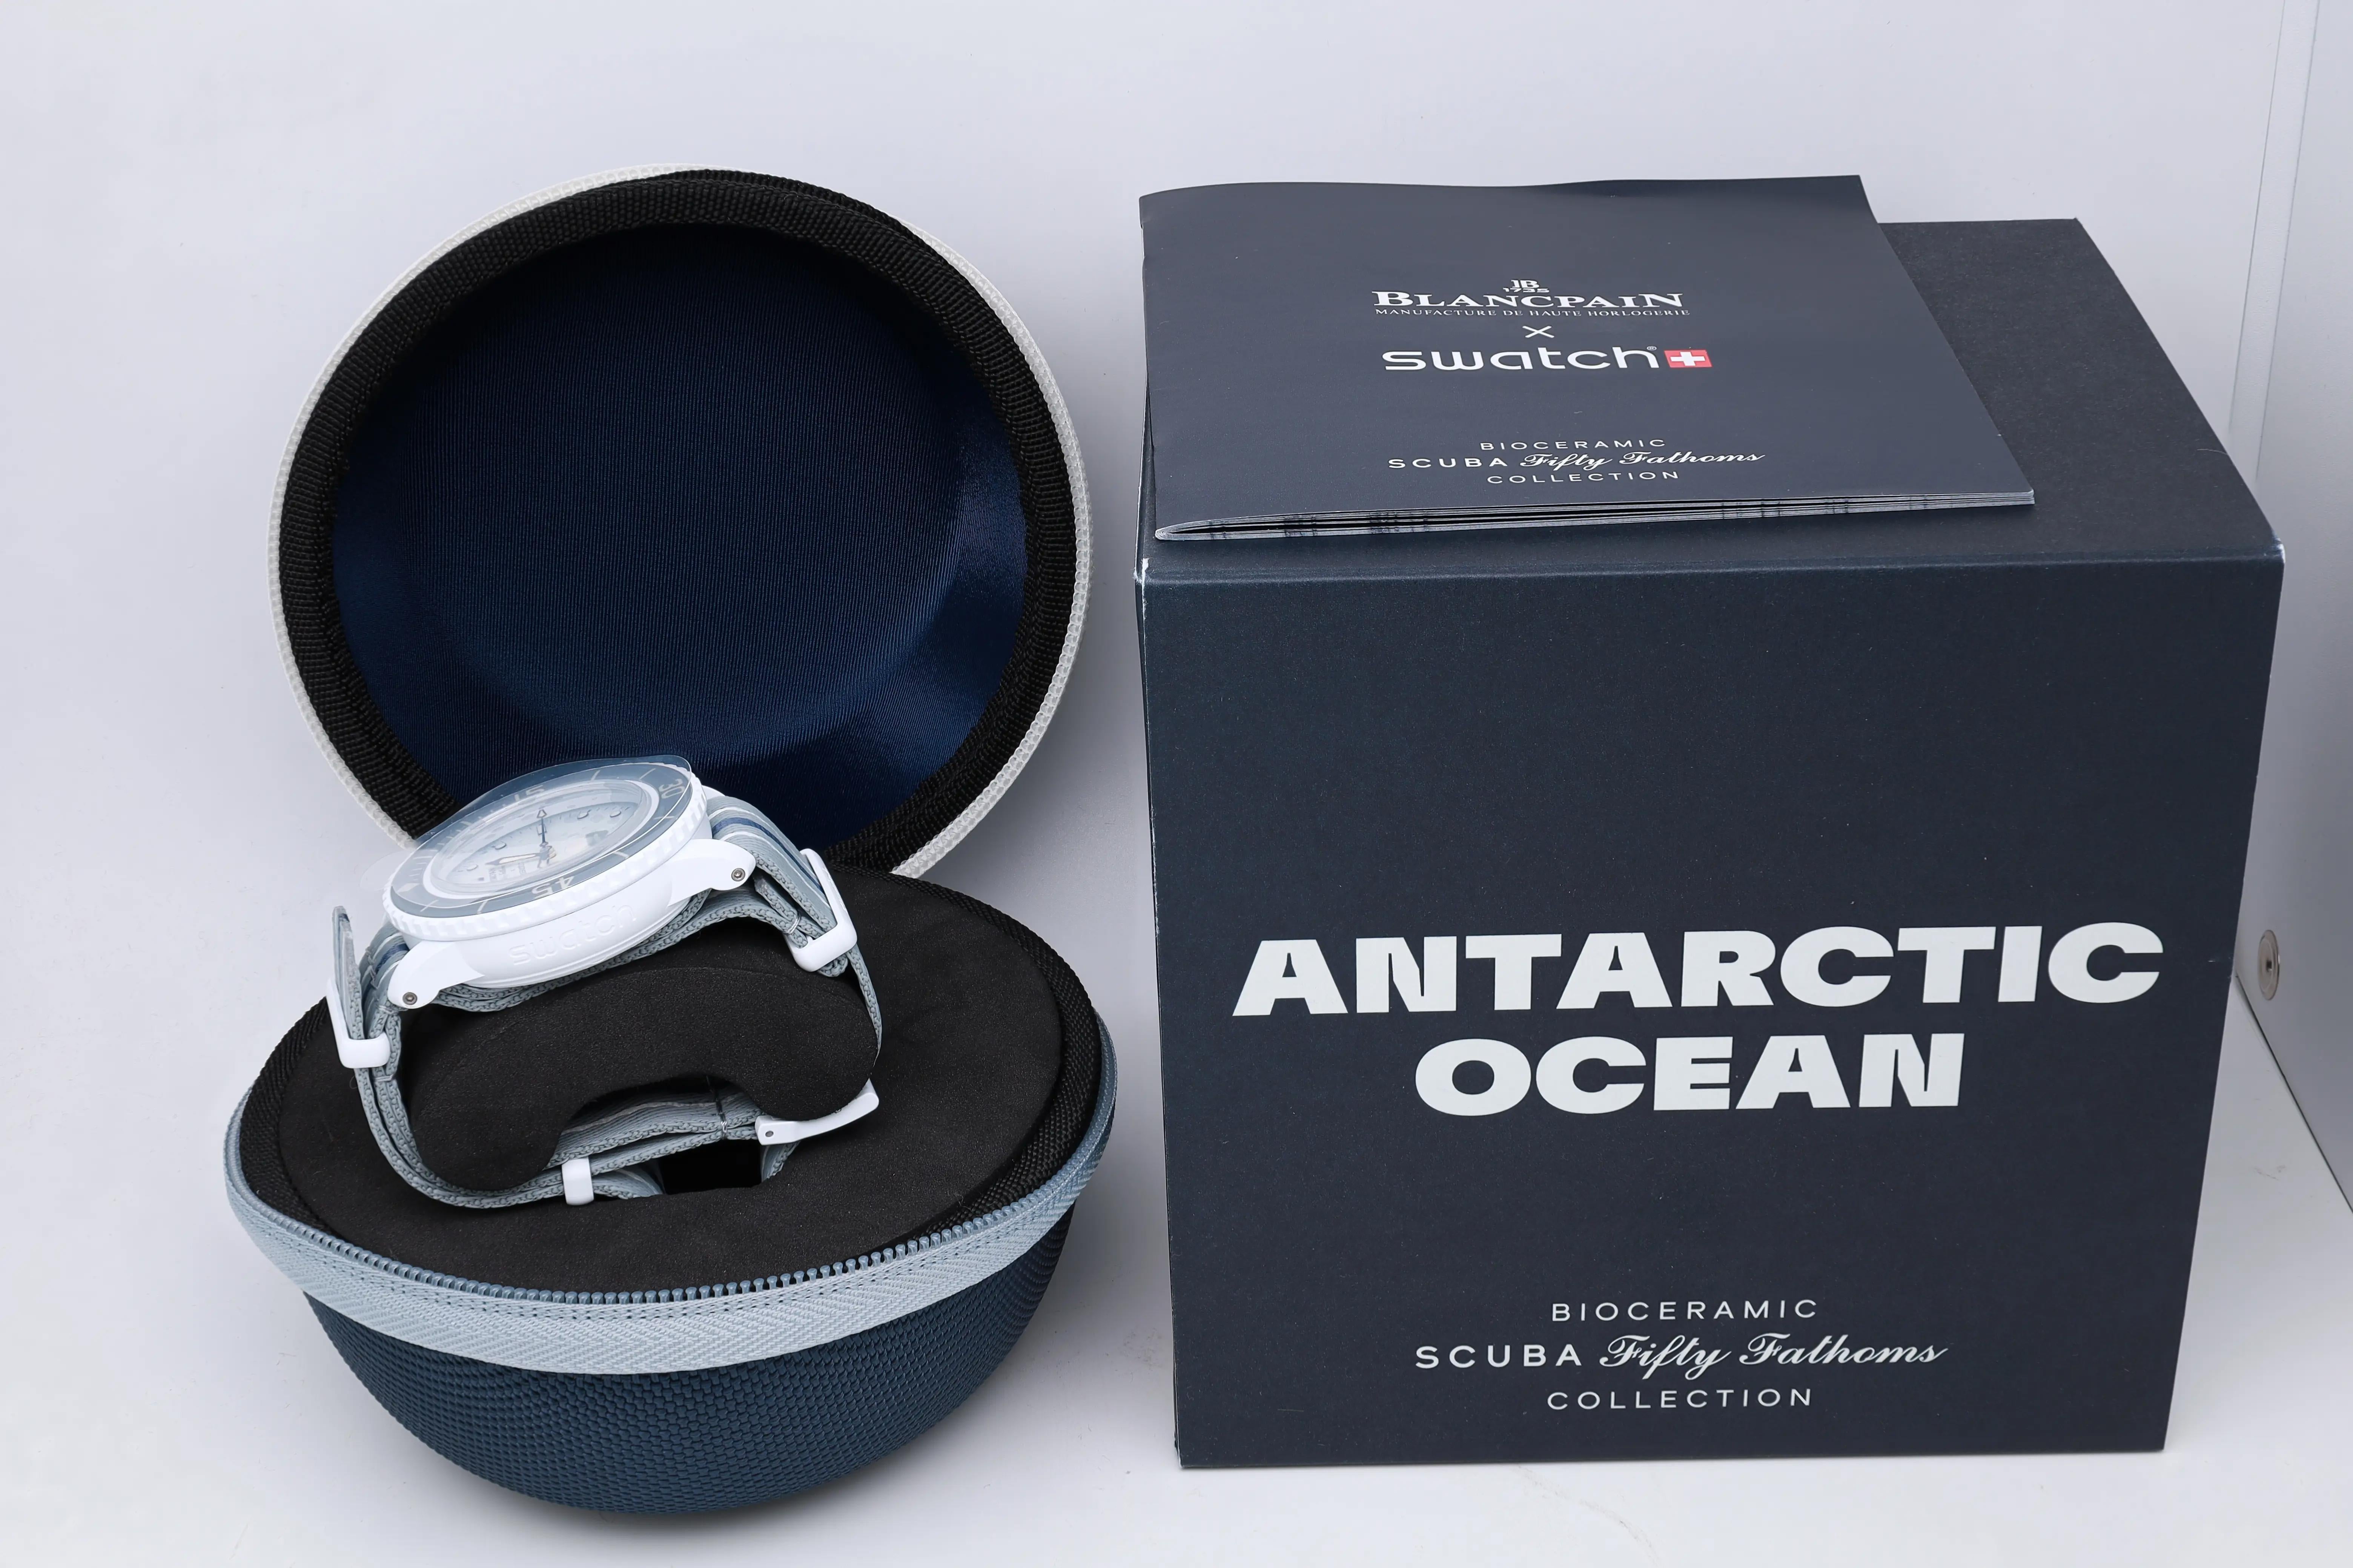 blancpain swatch antarctic